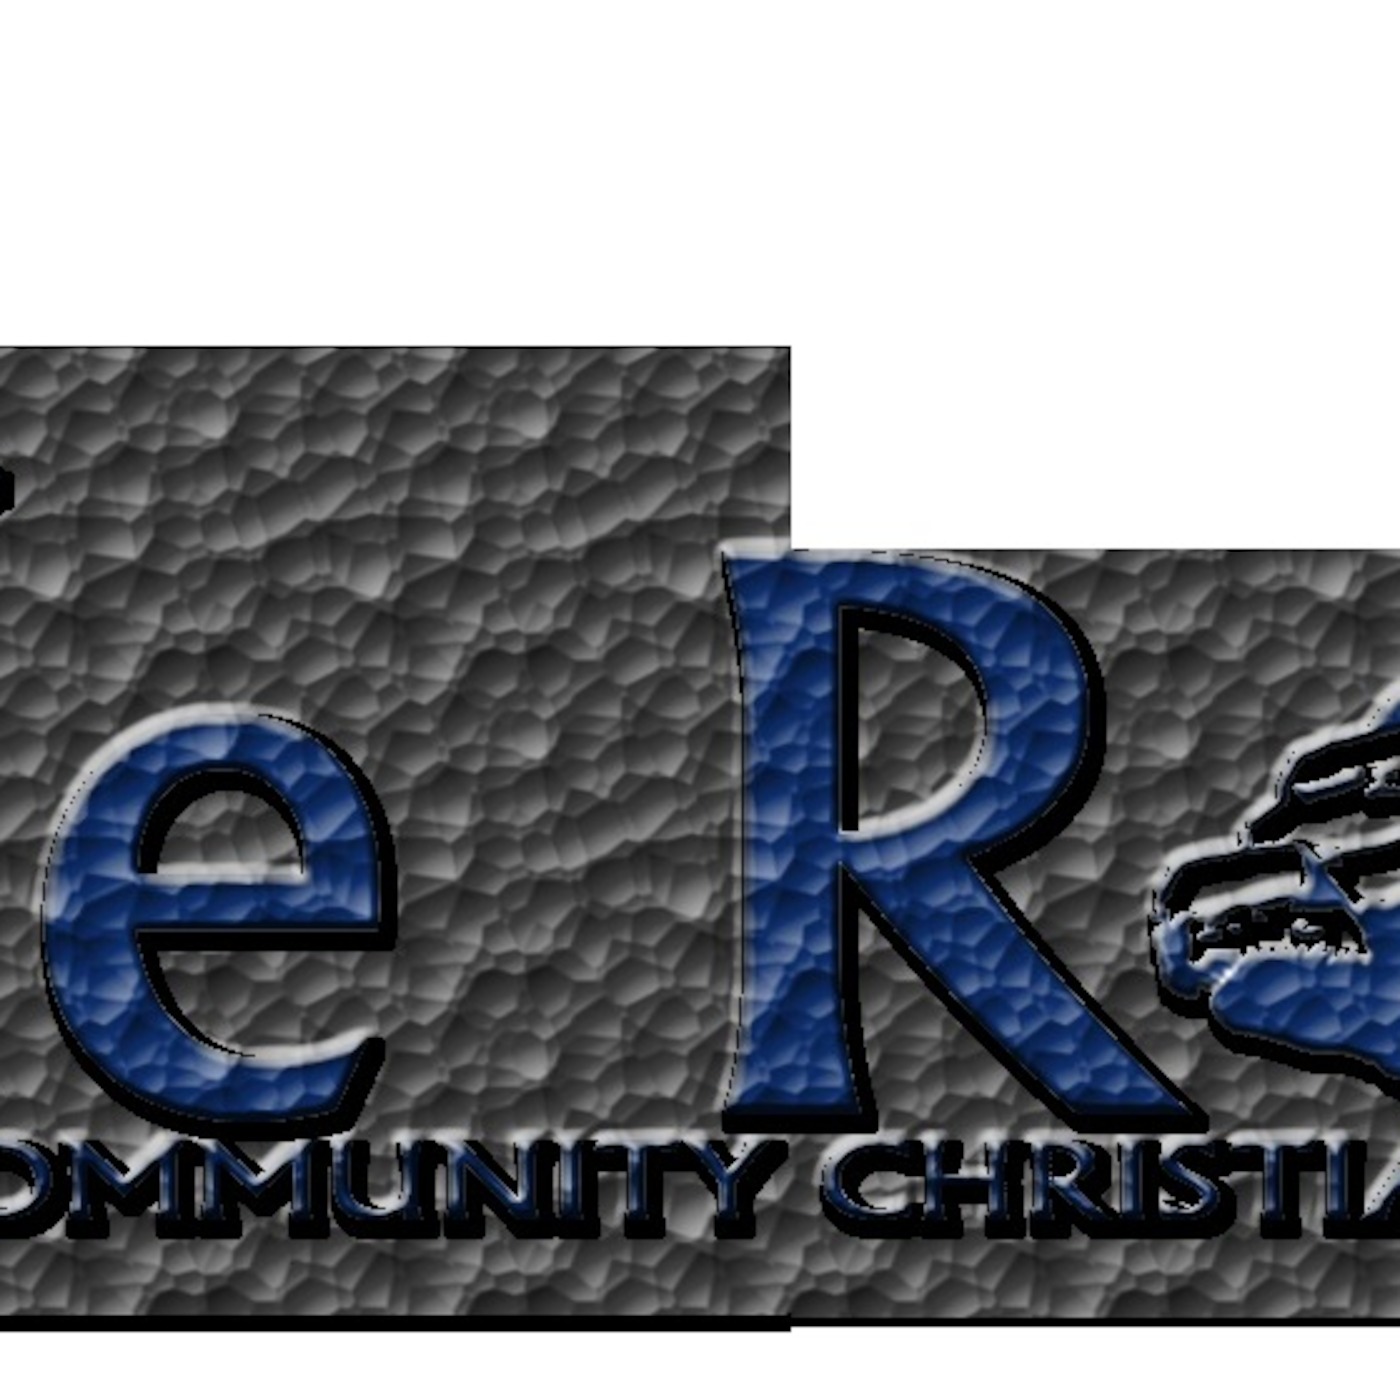 The Rock Community Chrisitan Church